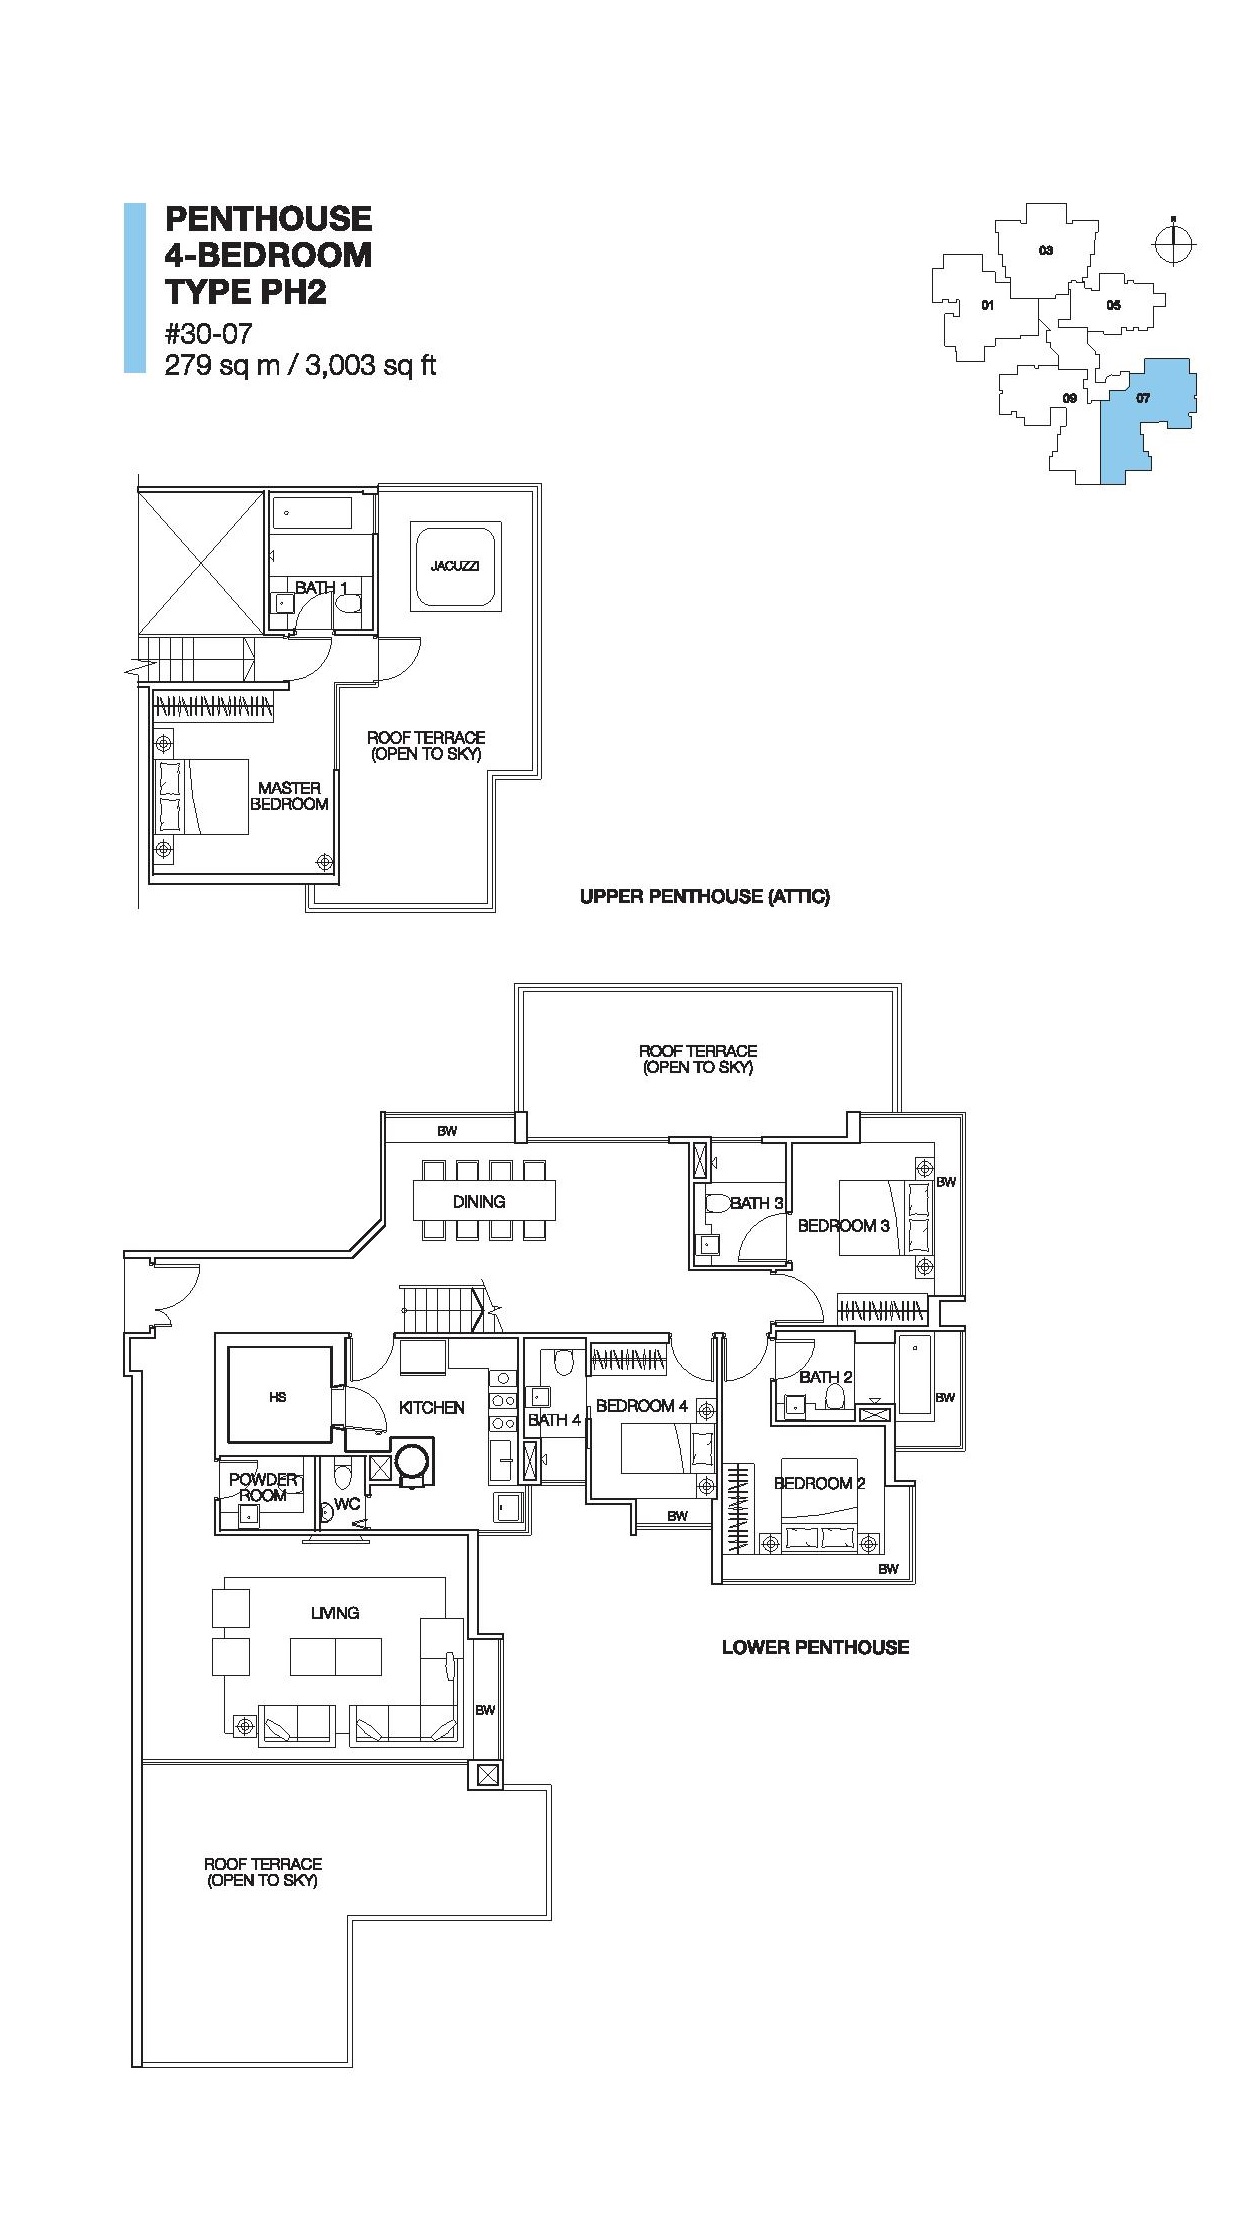 Cityscape 4 Bedroom Penthouse Type PH2 Floor Plans